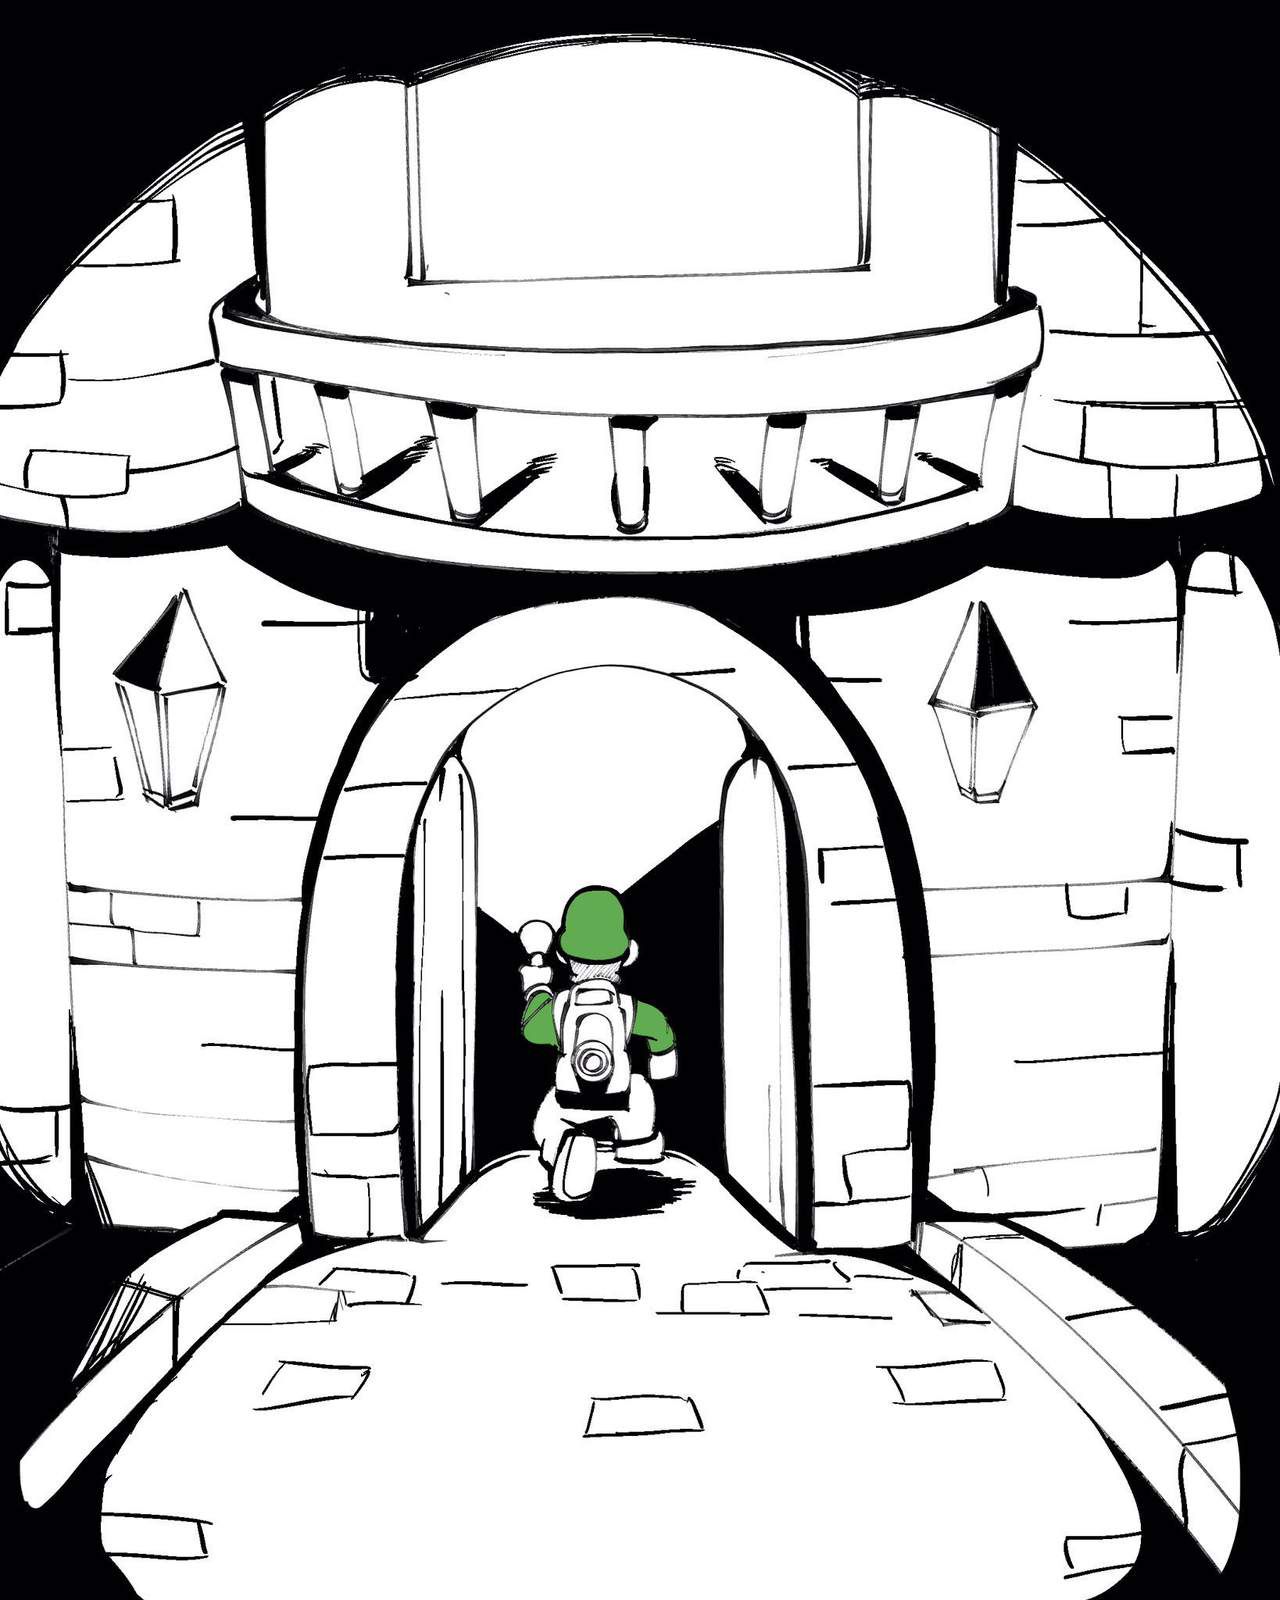 [Nisego] Inktober 2 - Luigi's Mansion (Super Mario Bros.) [Ongoing] 21